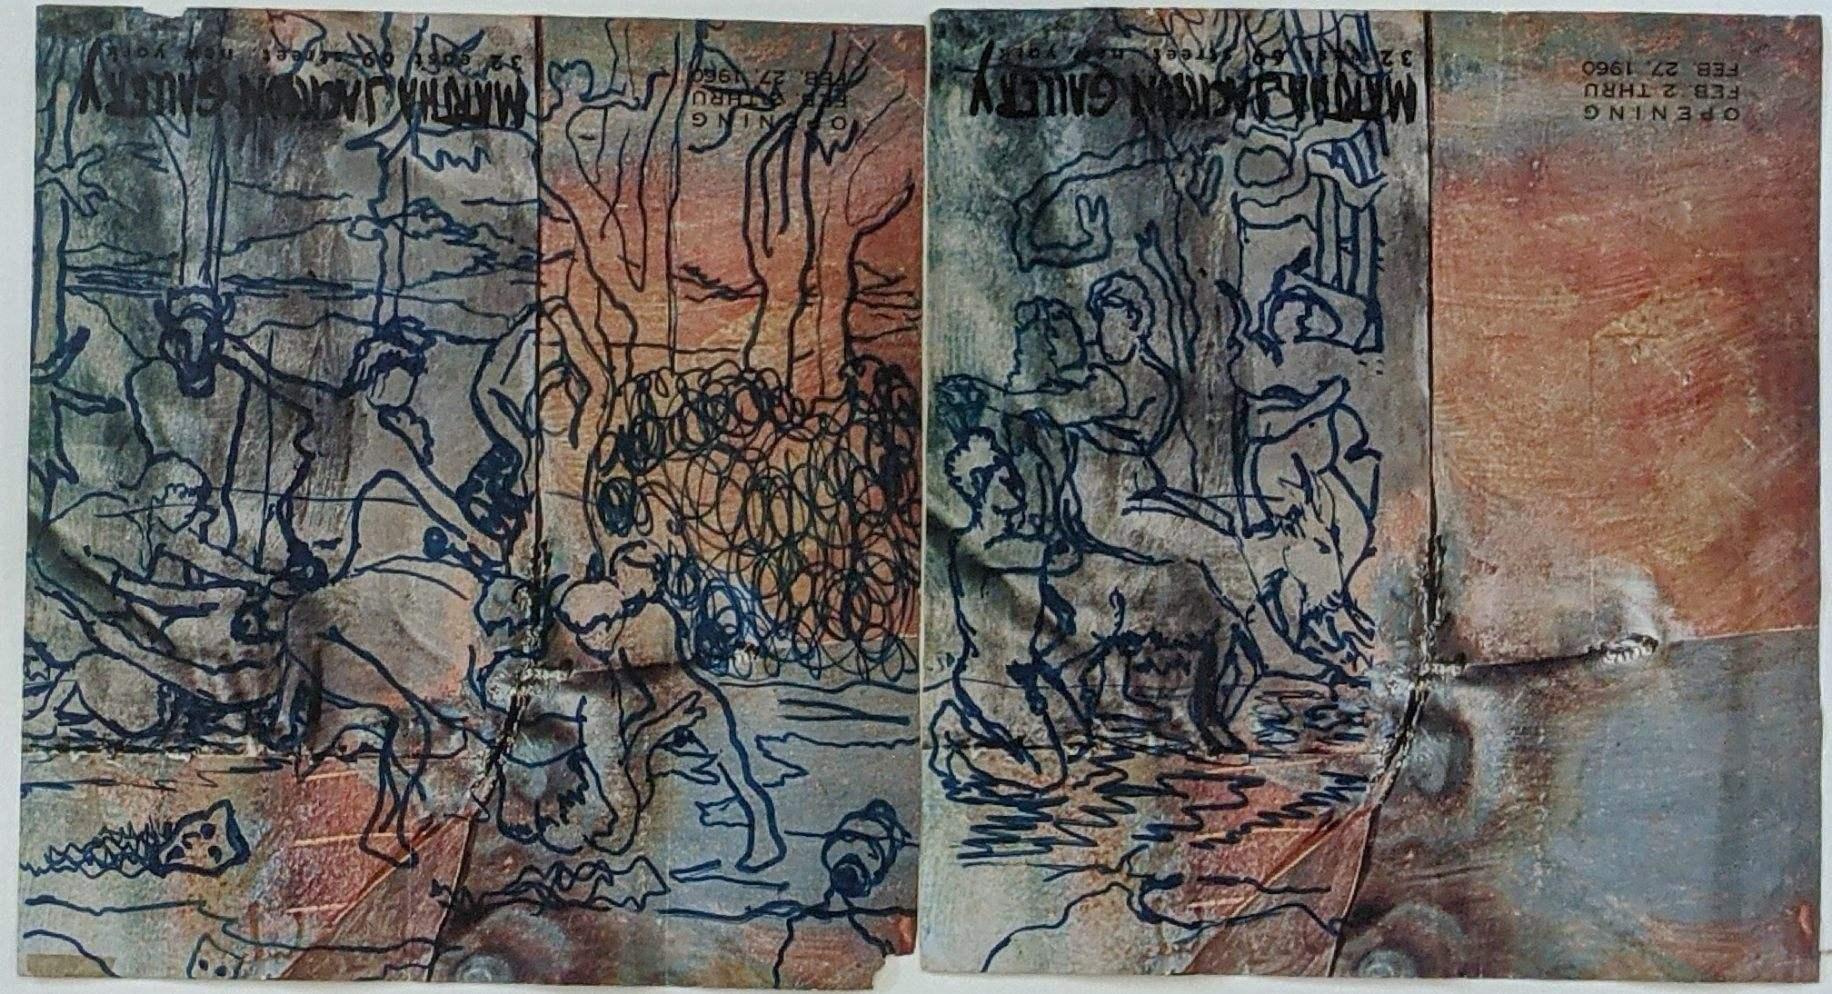 Bob Thompson
Untitled, 1964
Felt tip pen on printed paper
11 x 20 1/2 inches

Provenance:
The artist
Kathy Komaroff Goodman (gift from the artist)
Hollis Taggart, New York

Exhibited:
New York, Hollis Taggart, Wild and Brilliant: The Martha Jackson